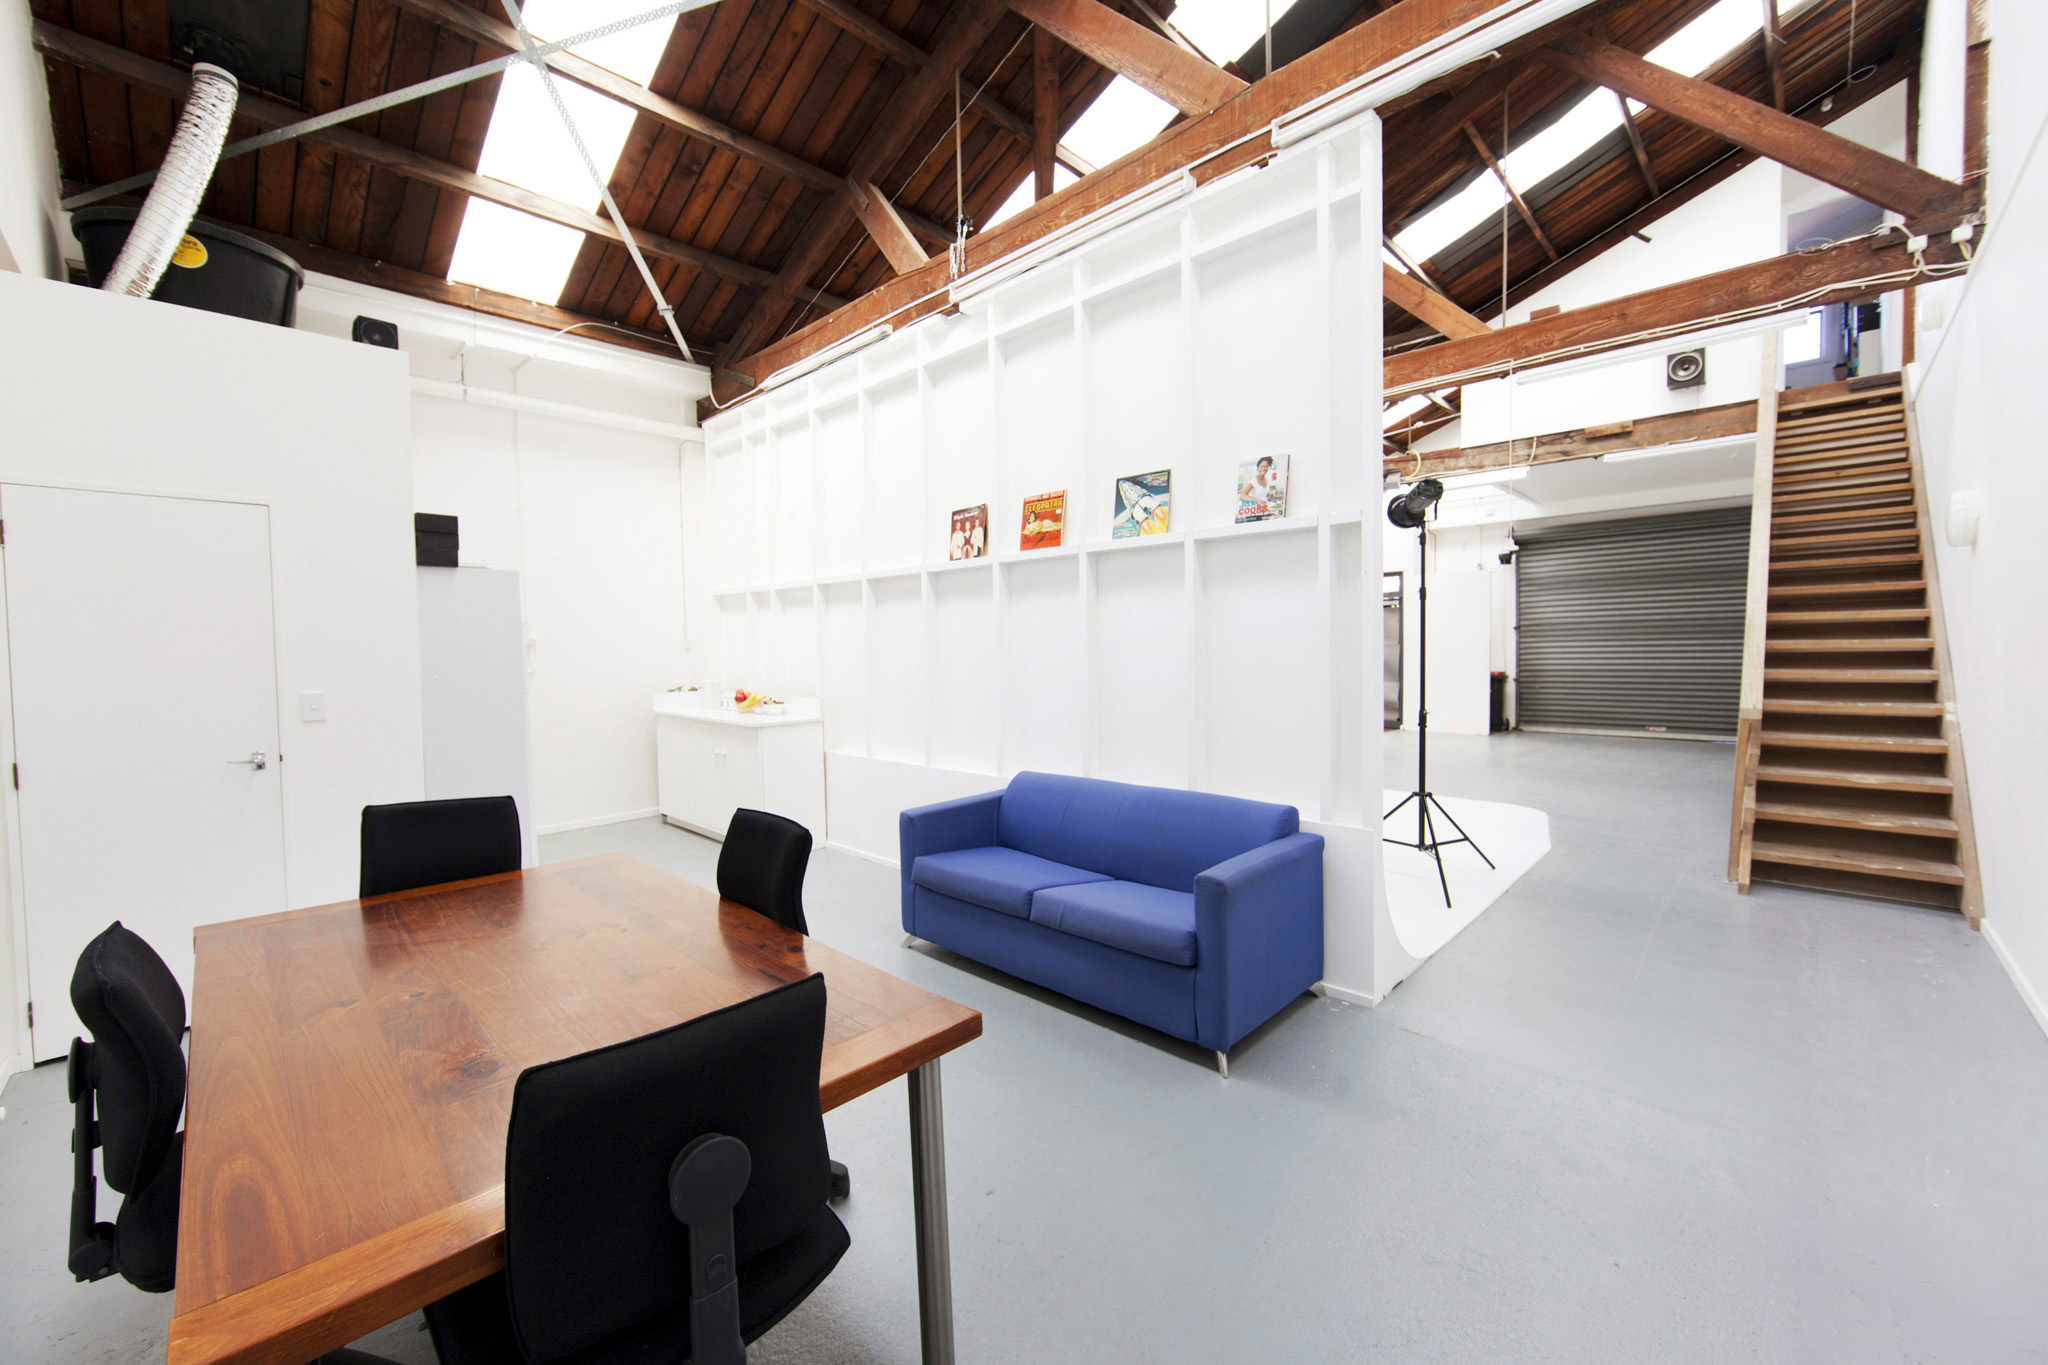 Studio kitchen and meeting area